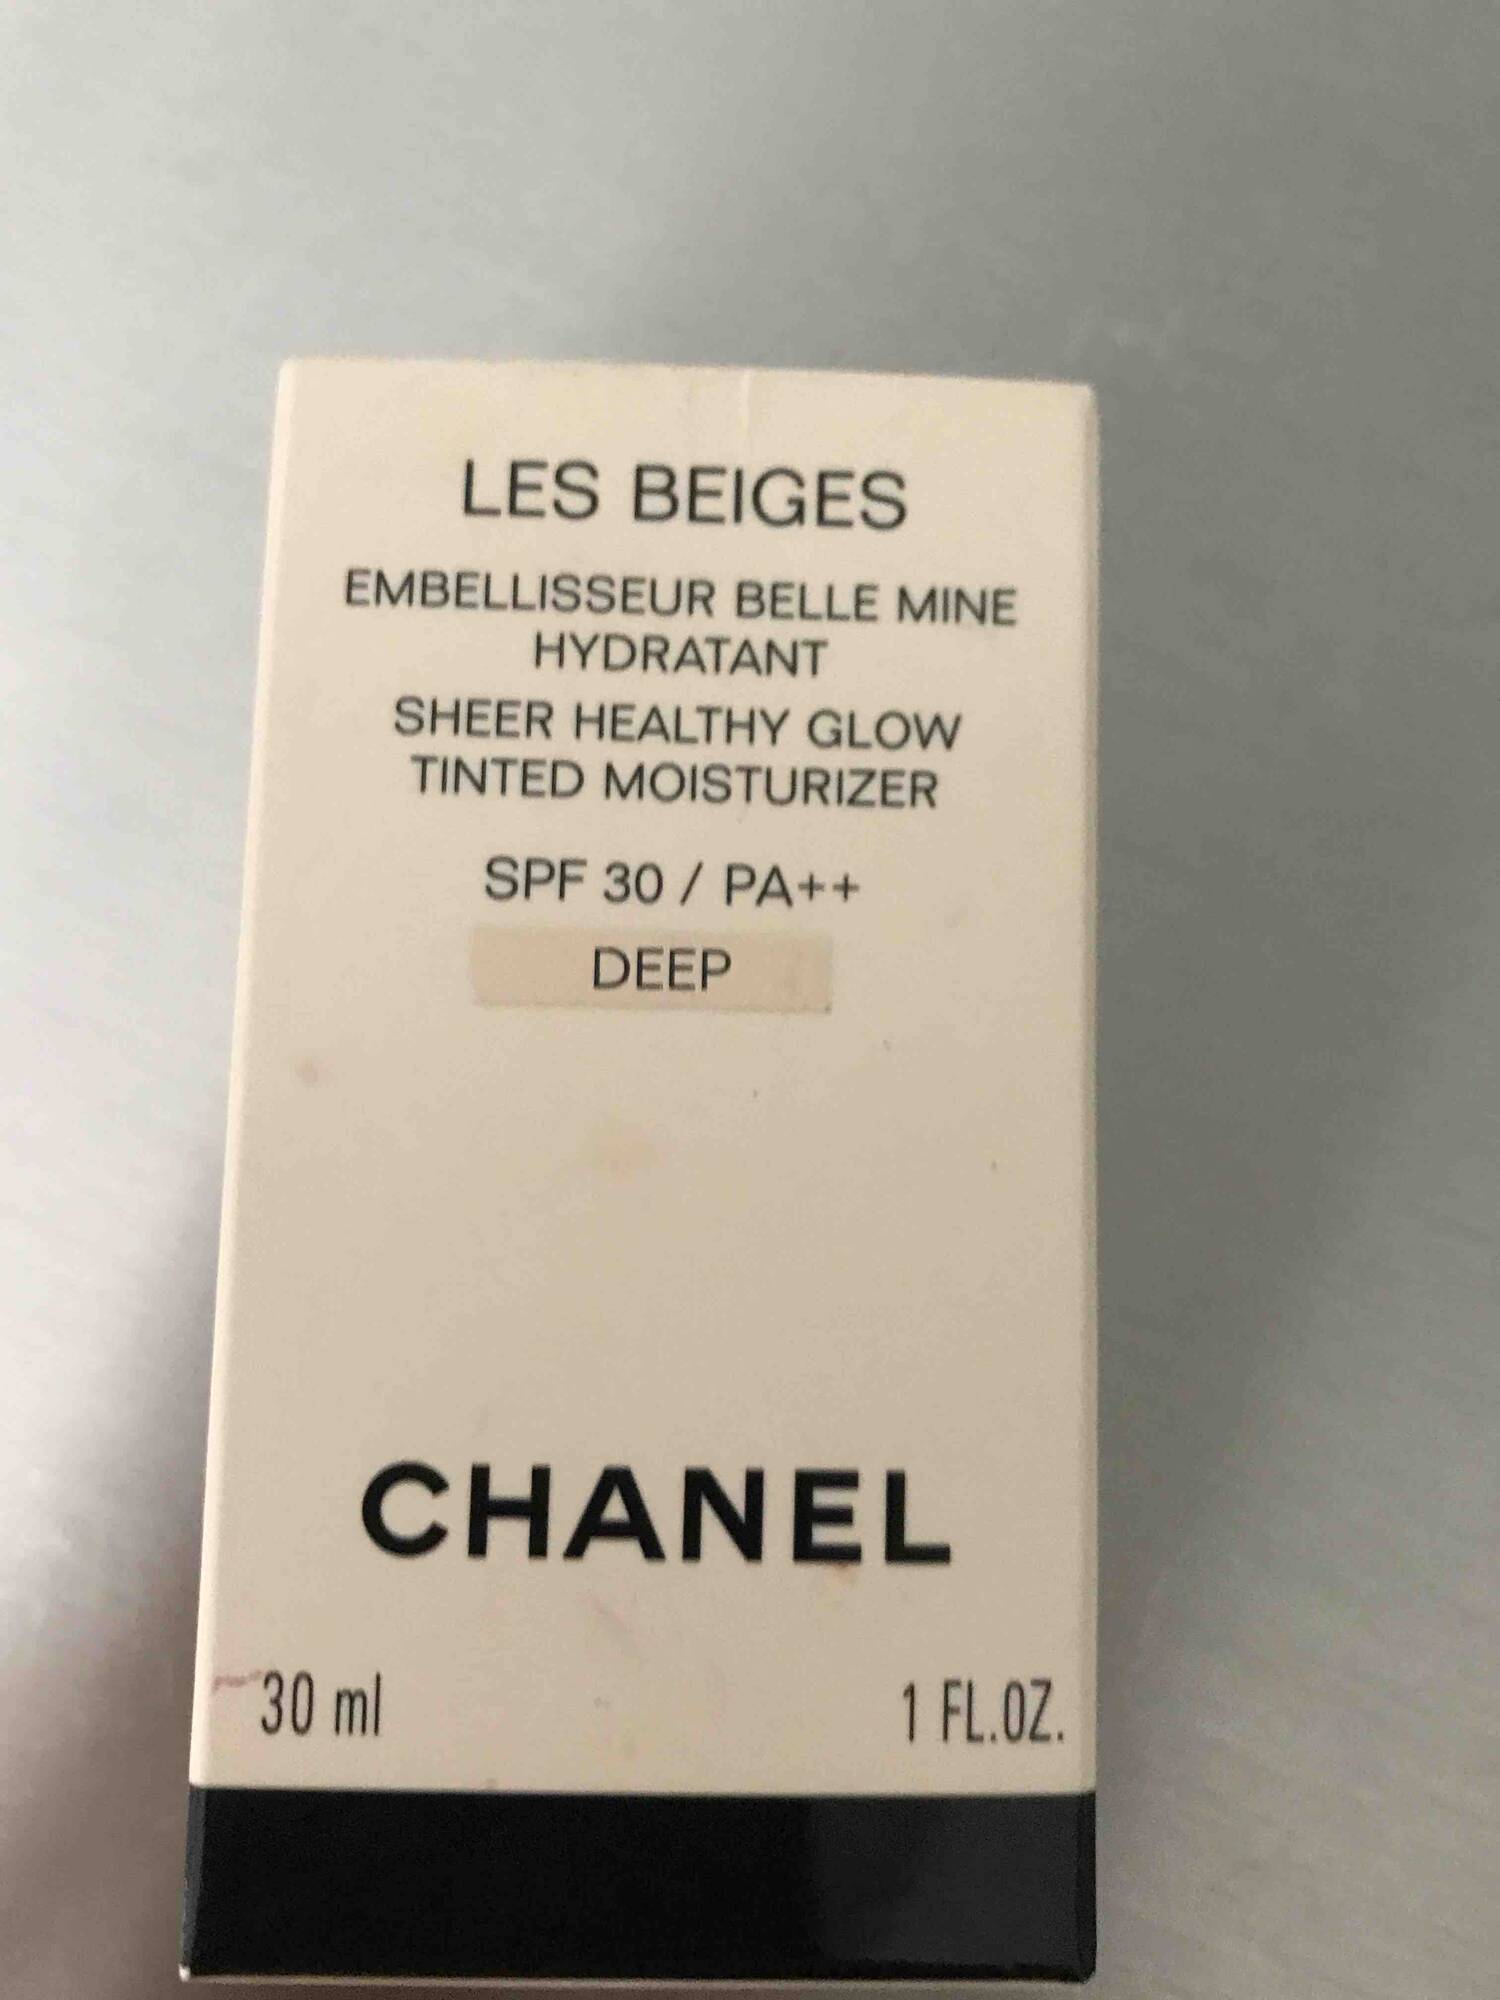 CHANEL - Les beiges - Embellisseur belle mine hydratant SPF 30/PA++